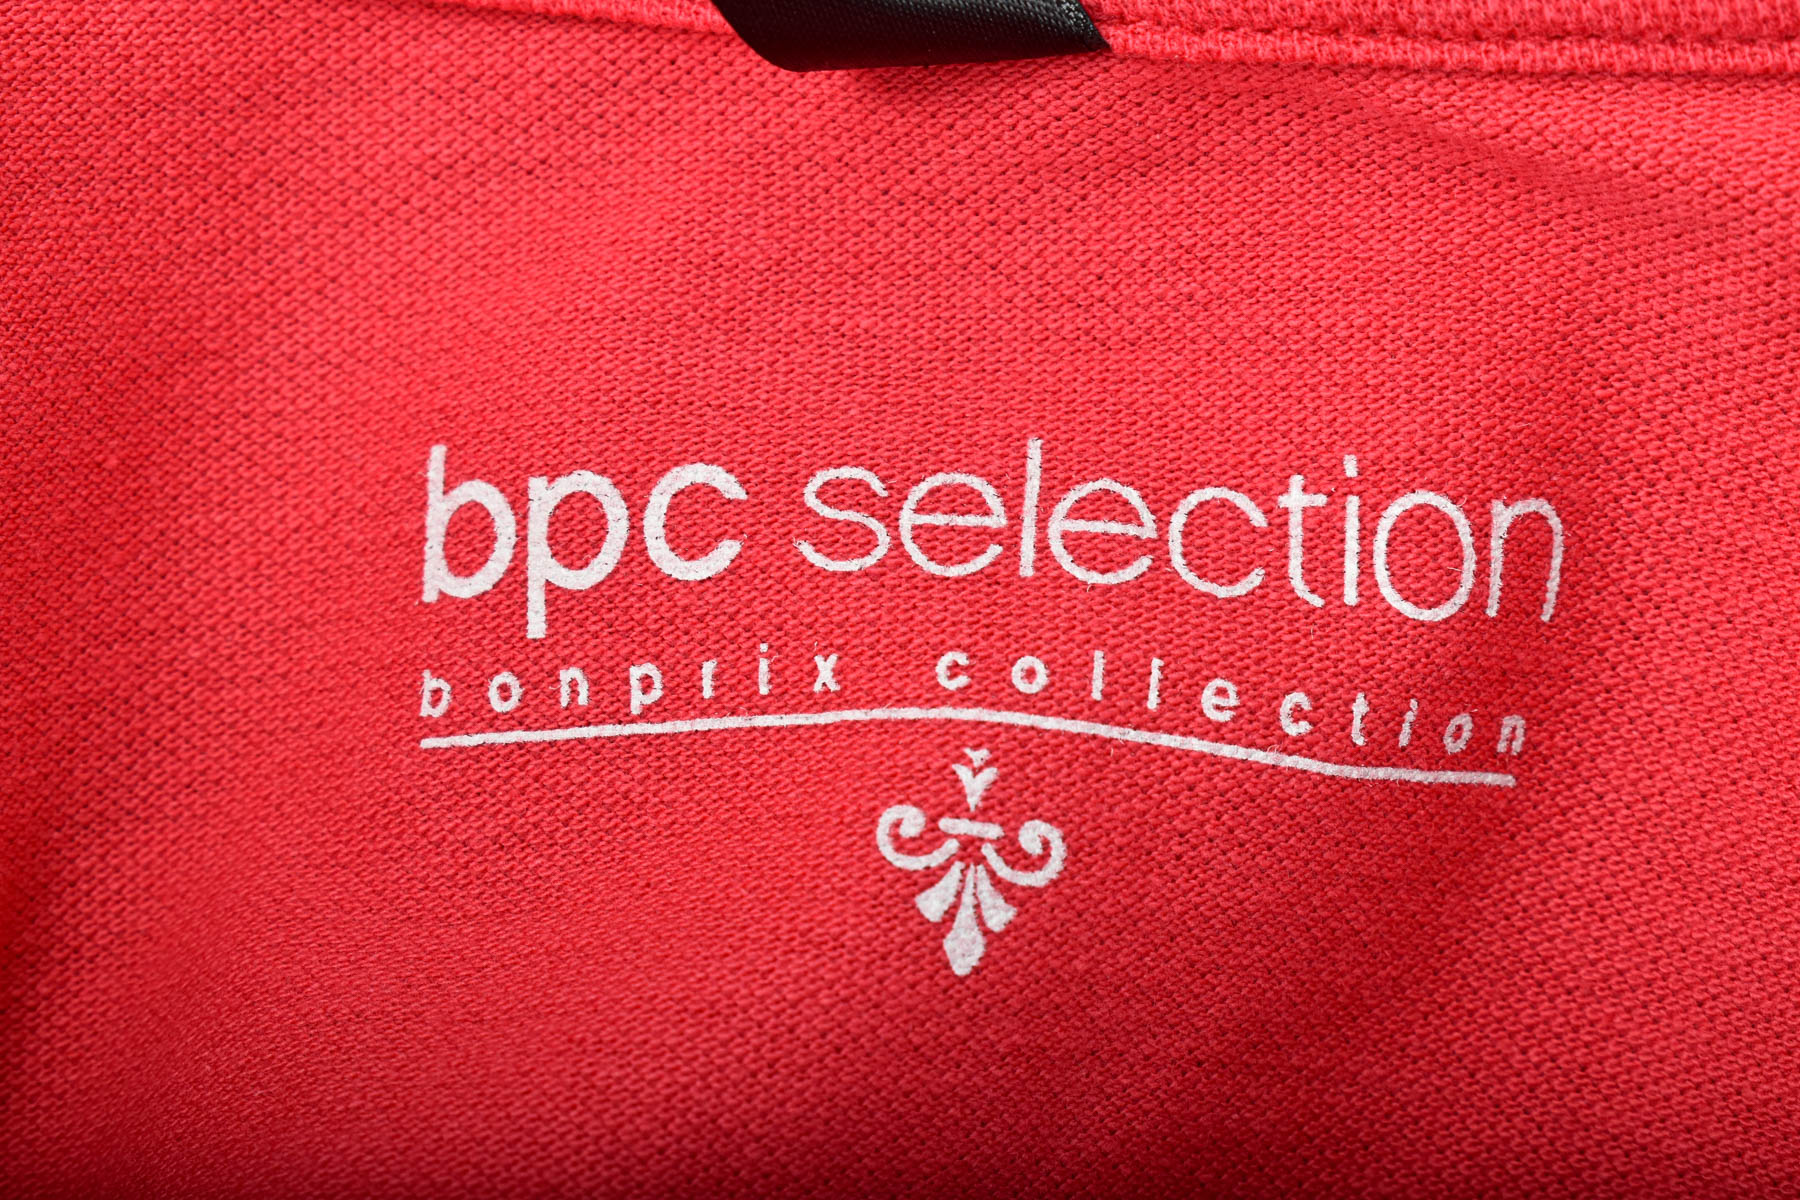 Women's t-shirt - Bpc selection bonprix collection - 2